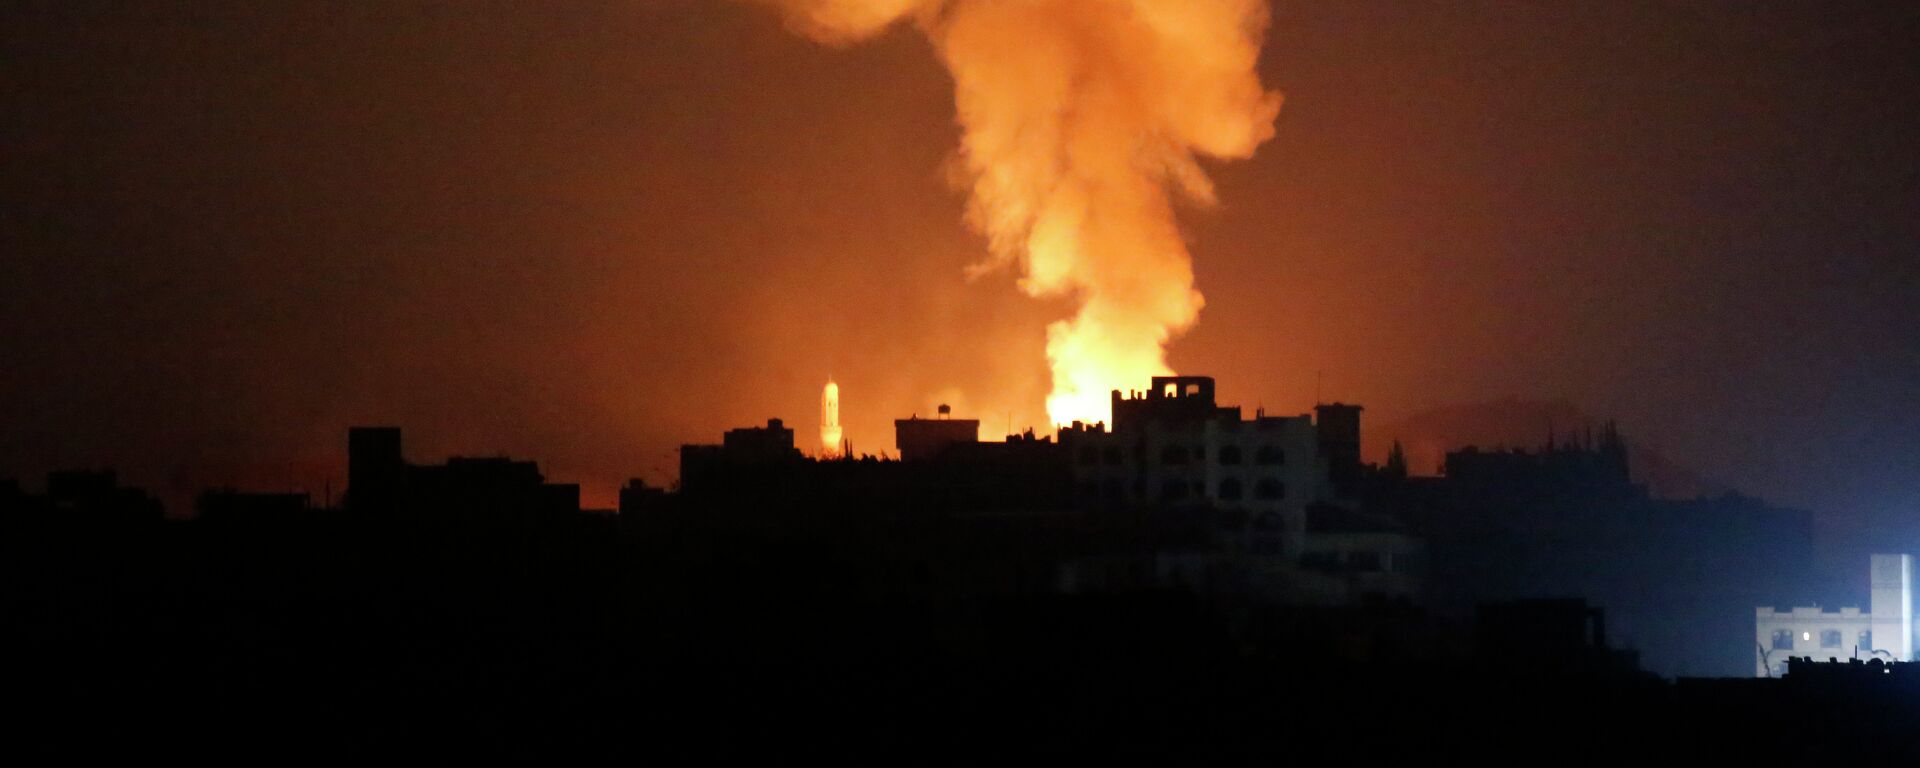 Fire and smoke rises after a Saudi-led airstrike on Sanaa, Yemen, Tuesday, April 28, 2015 - Sputnik International, 1920, 23.11.2021